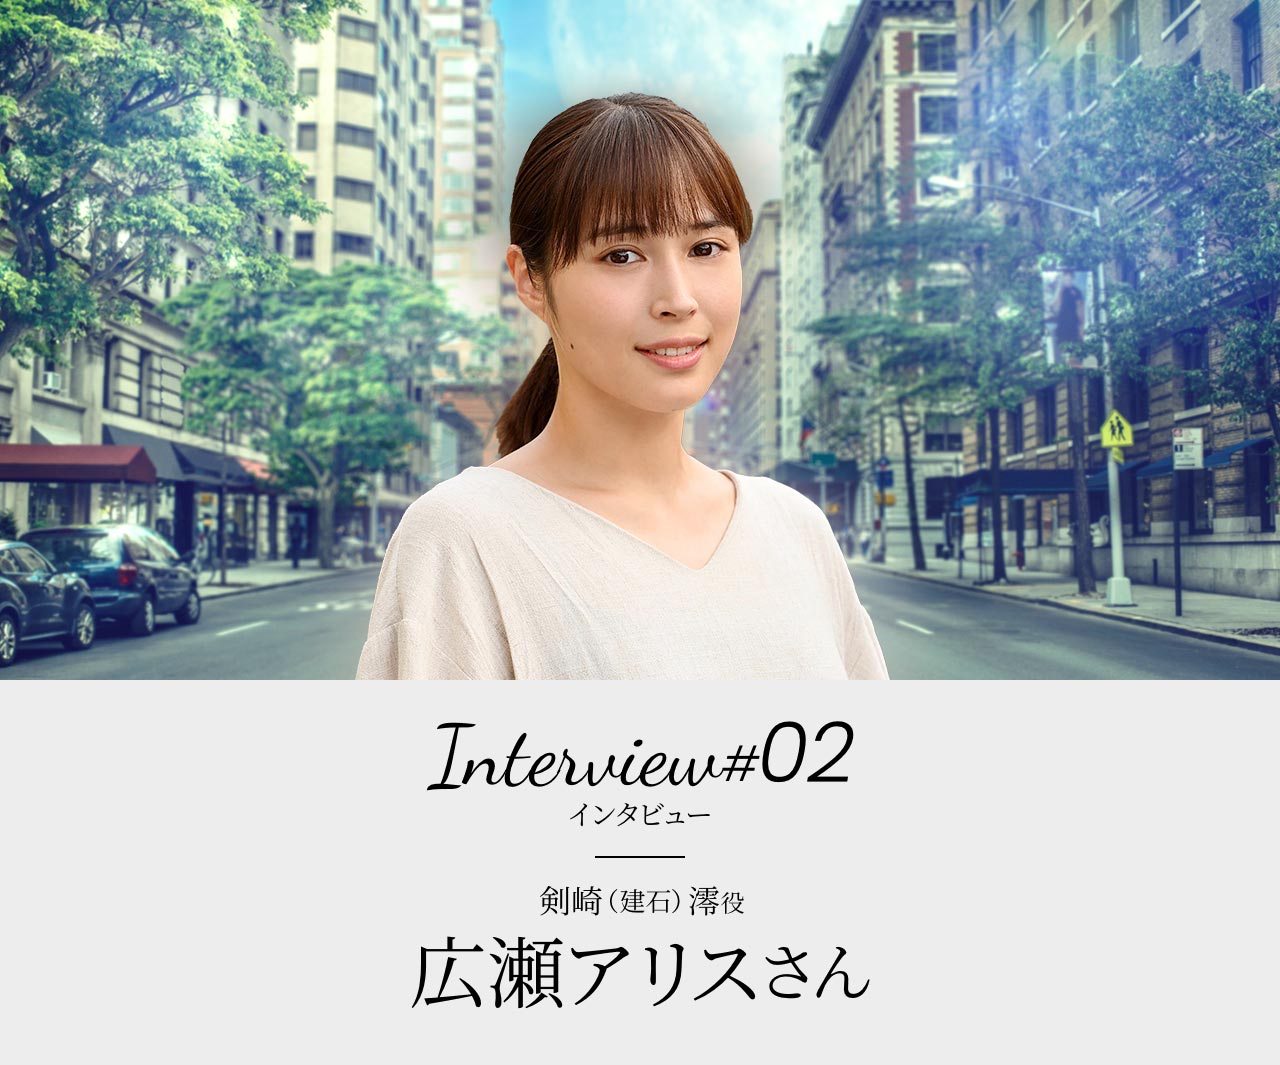 Interview#02 剣崎（建石）澪役 広瀬アリスさん